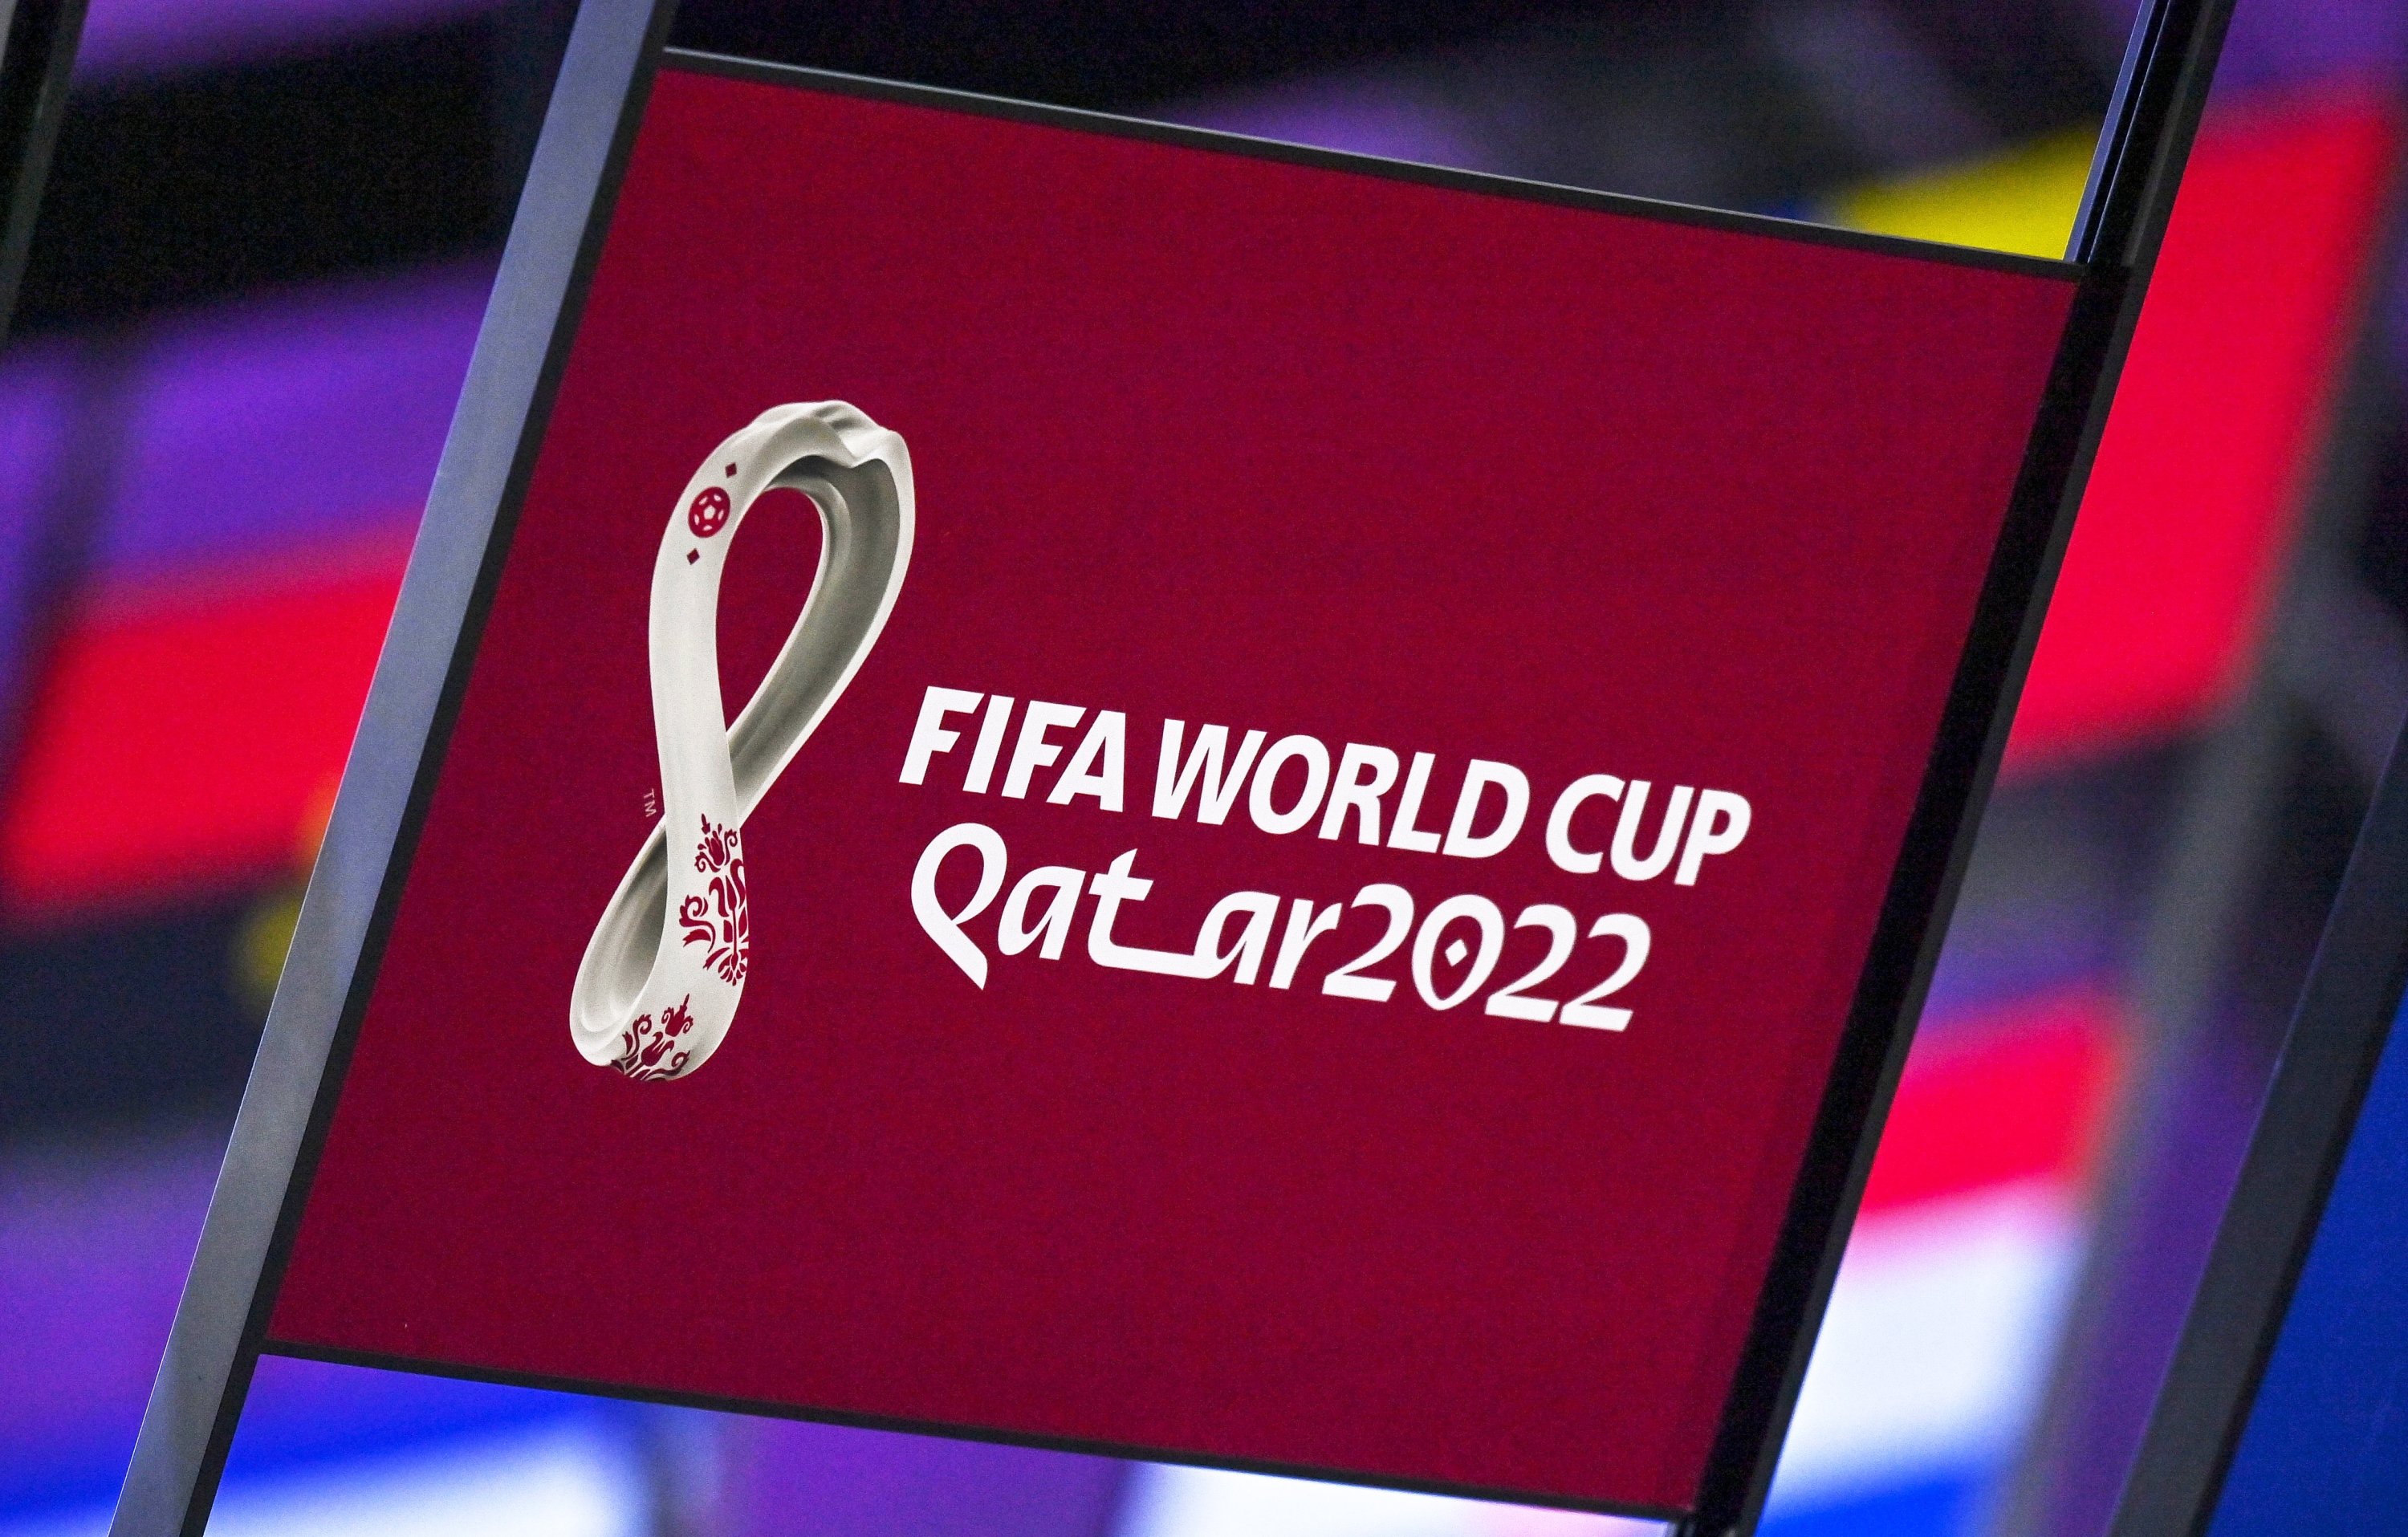 FIFA transfer revenue in Brazil 2022